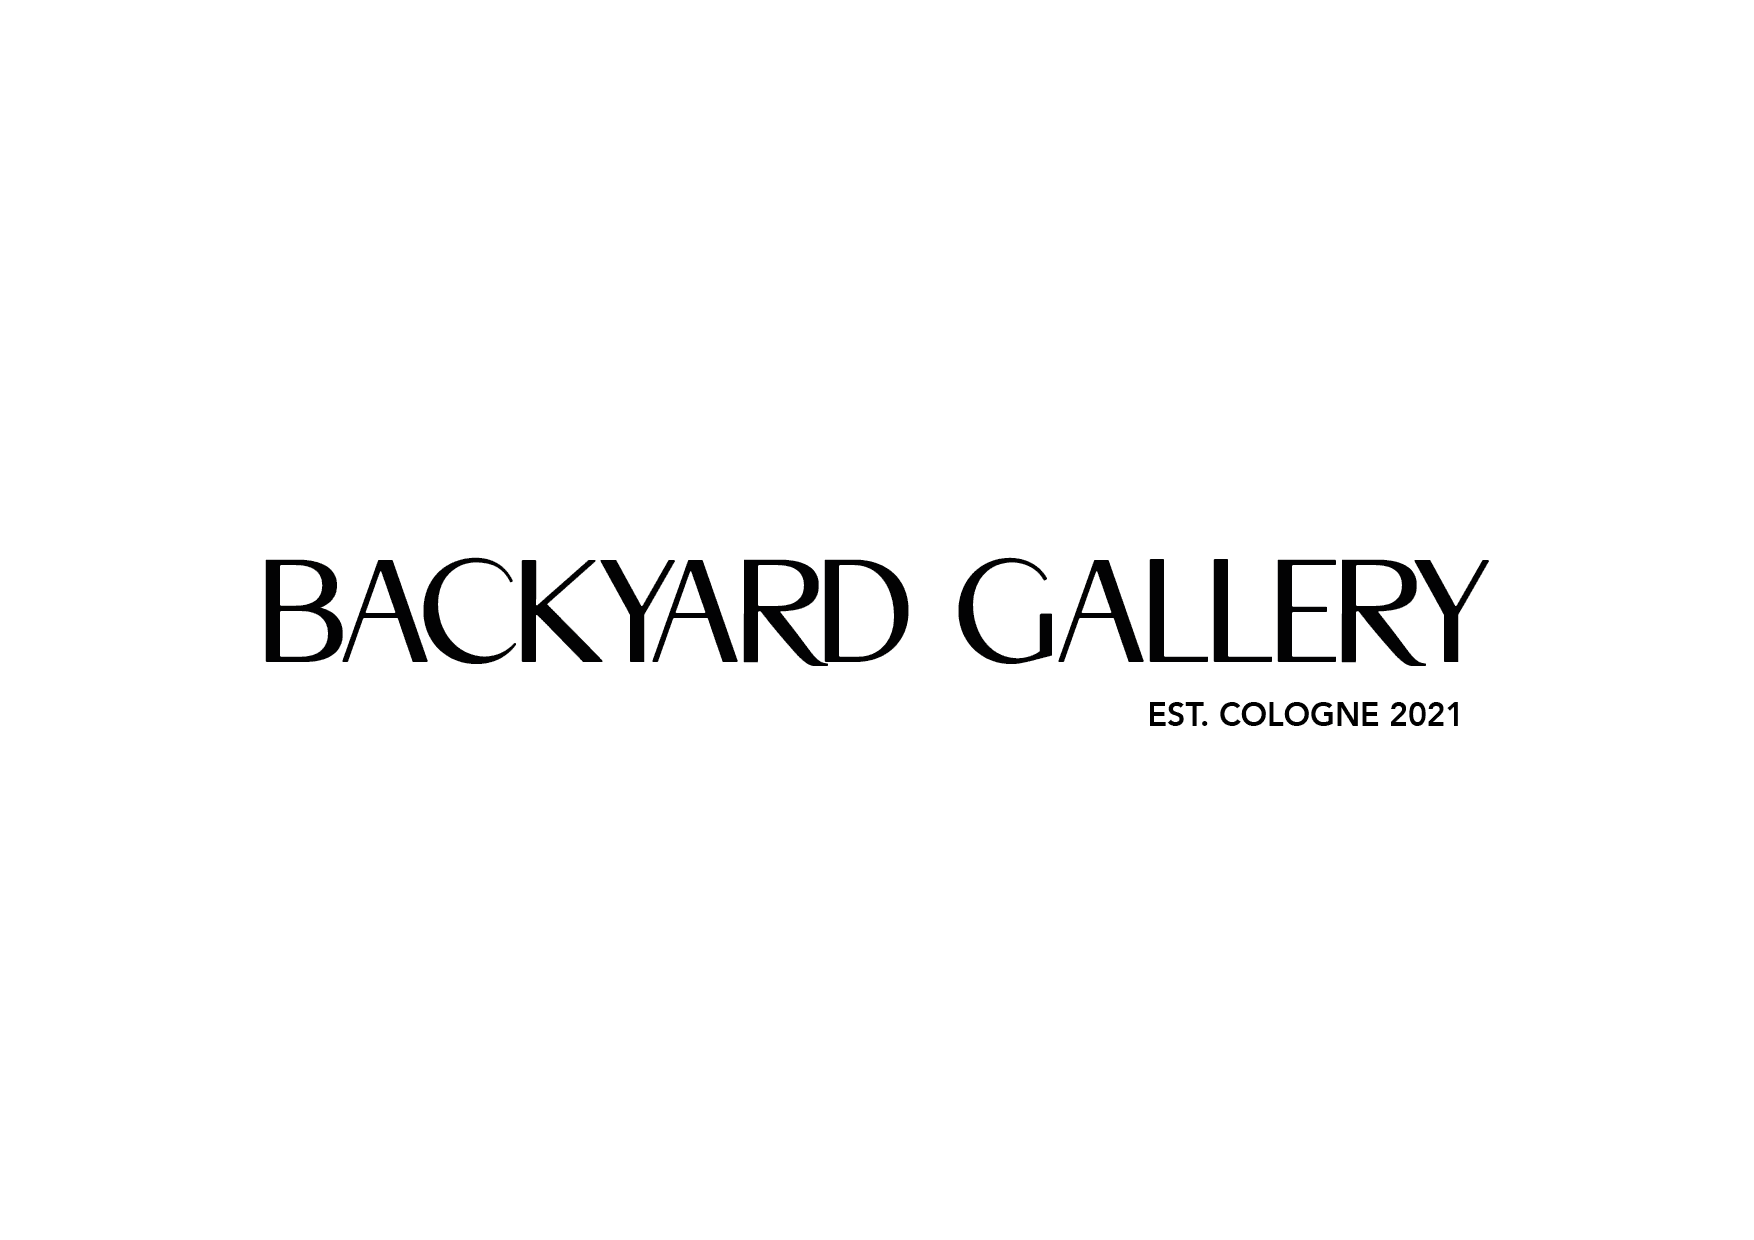 BackyardGallery バナー